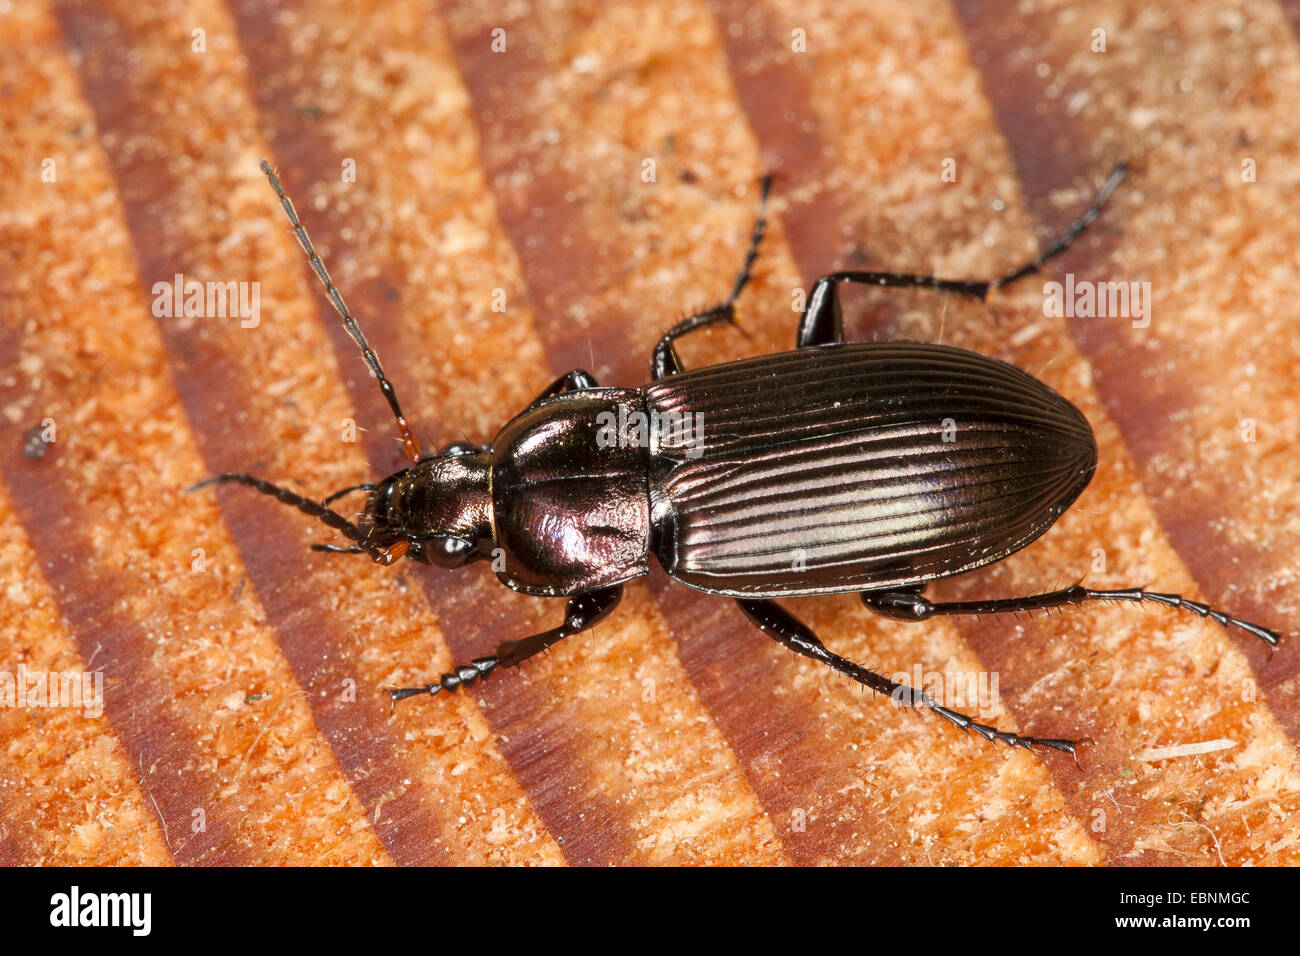 Pioggia beetle (Pterostichus cupreus, Poecilus cupreus), sulla fetta di albero, Germania Foto Stock